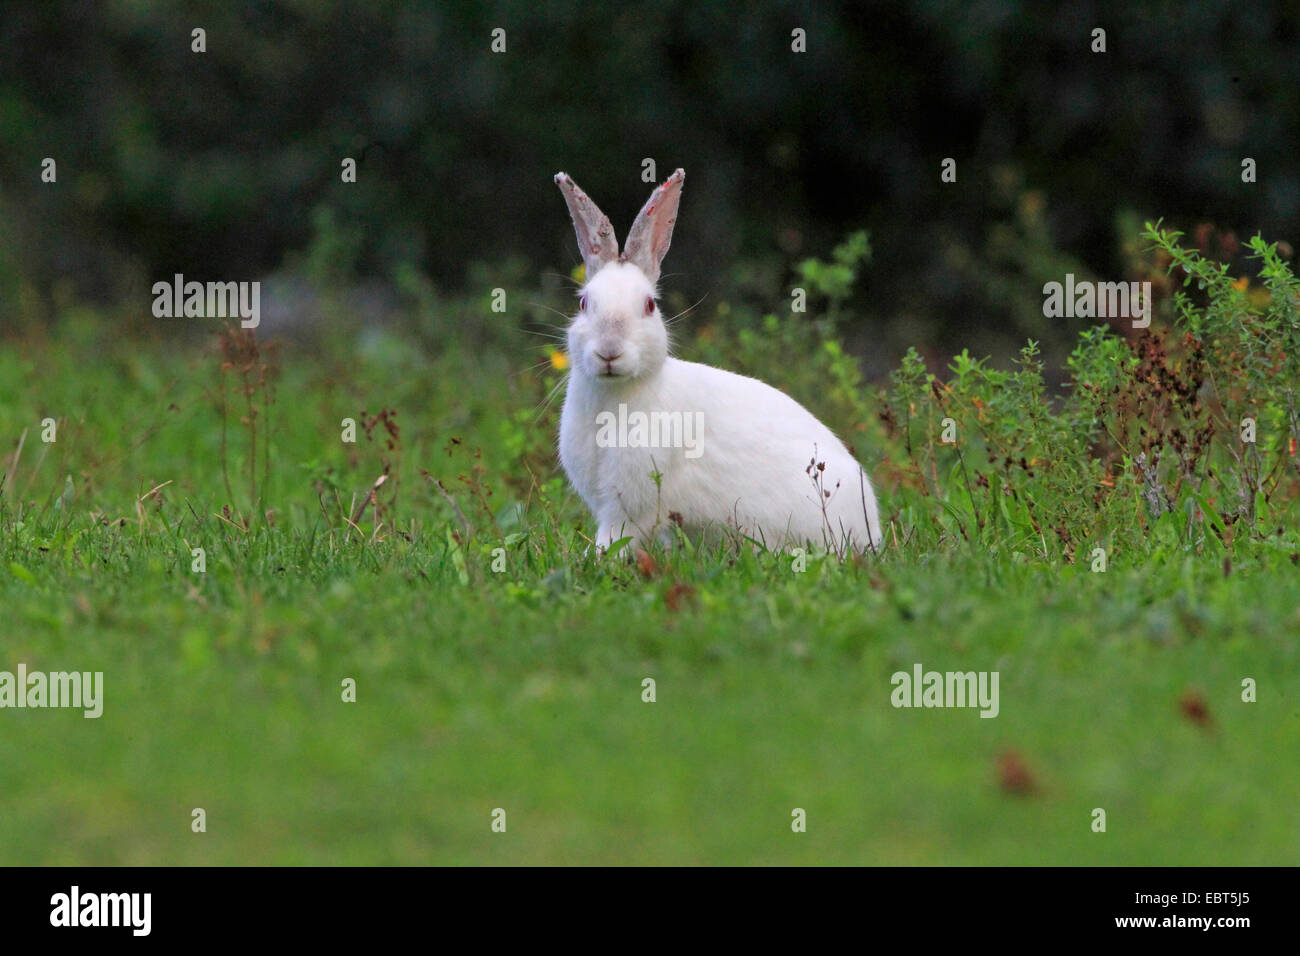 Conejo europeo (Oryctolagus cuniculus), albino sentado en una pradera, Alemania Foto de stock